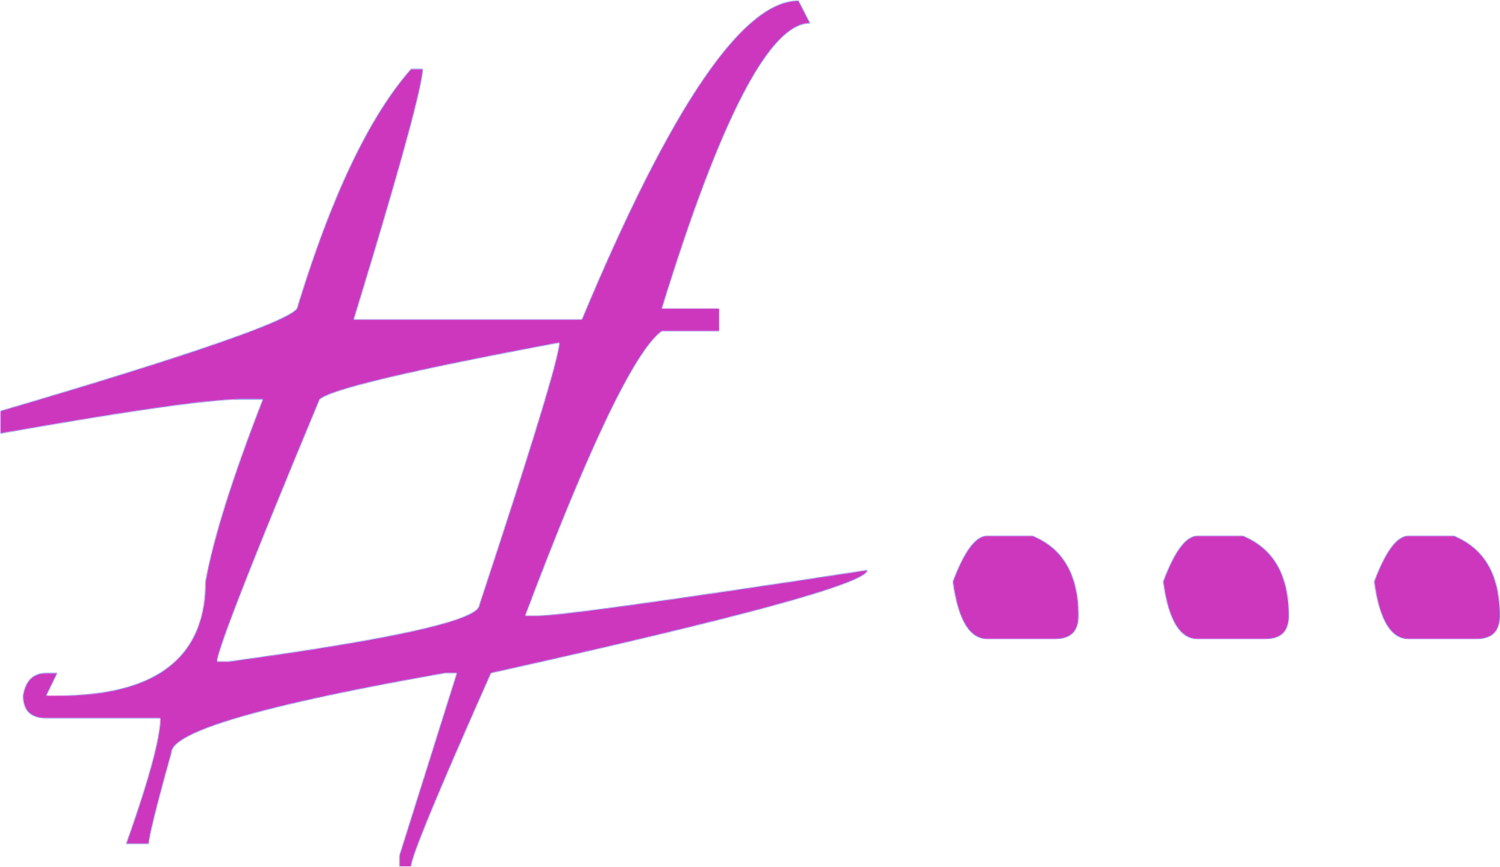 Hashtag Logo PNG Transparent Image